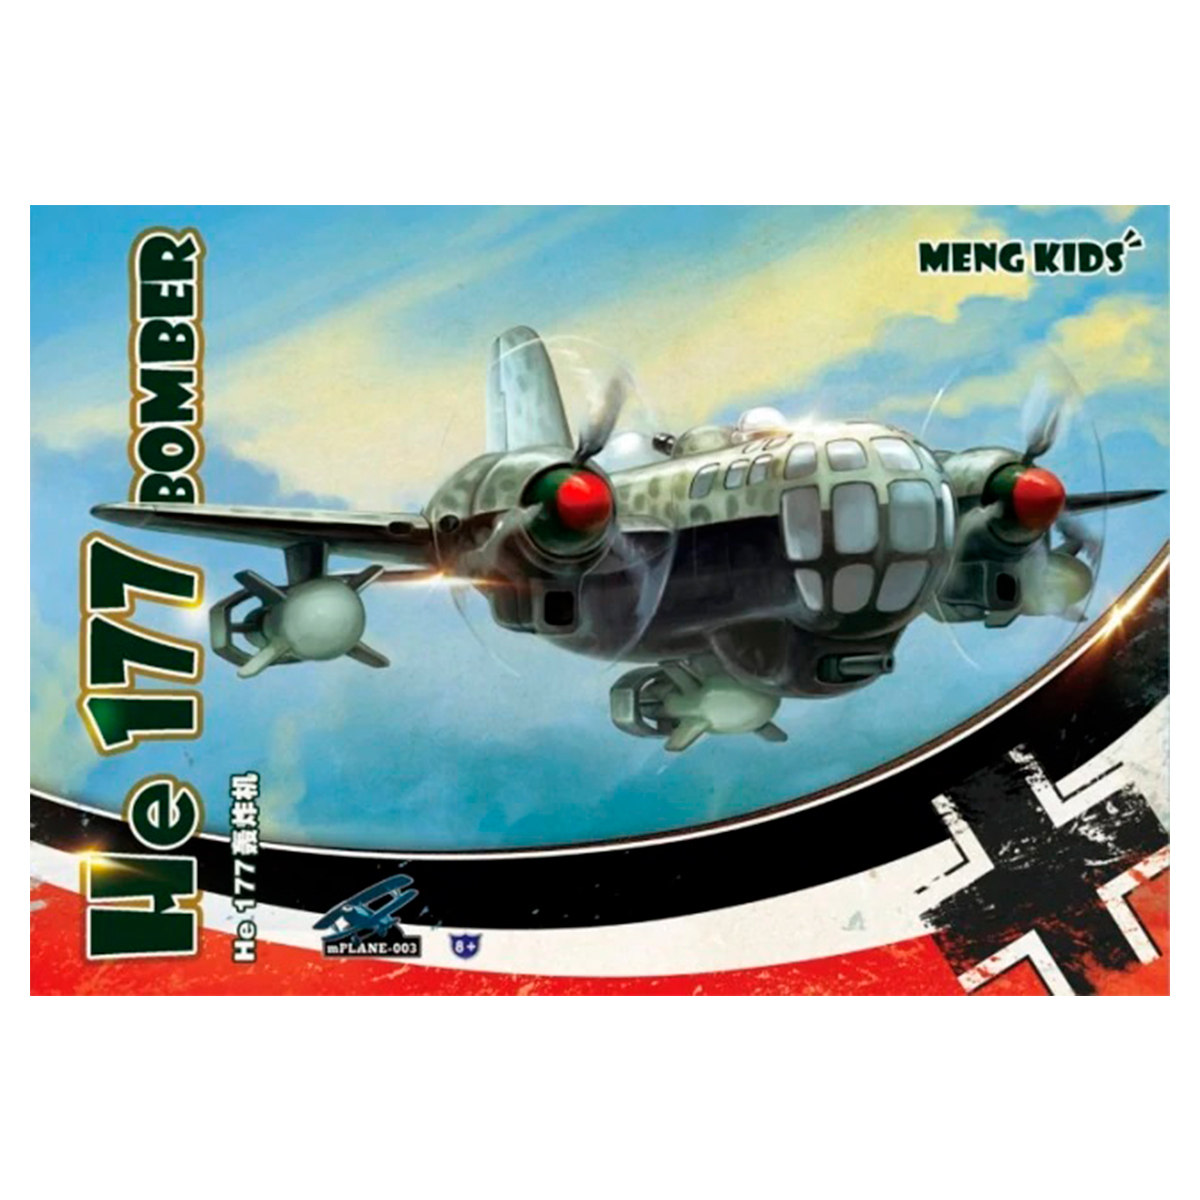 He 177 Bomber (CARTOON MODEL)